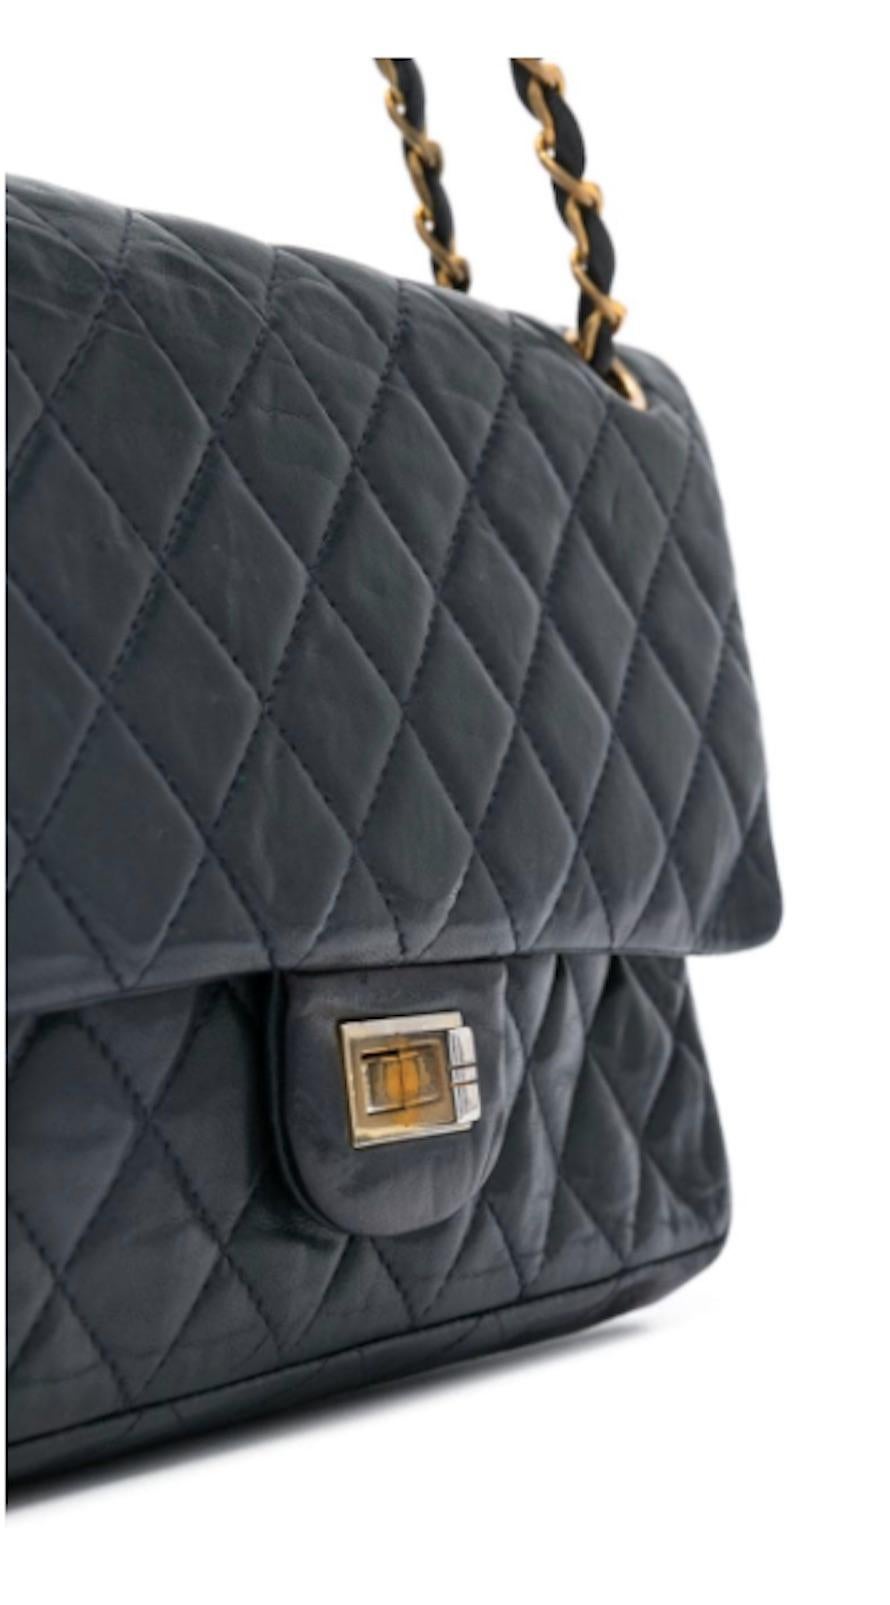 Black 1960s Chanel 2.55 Navy Leather Bag